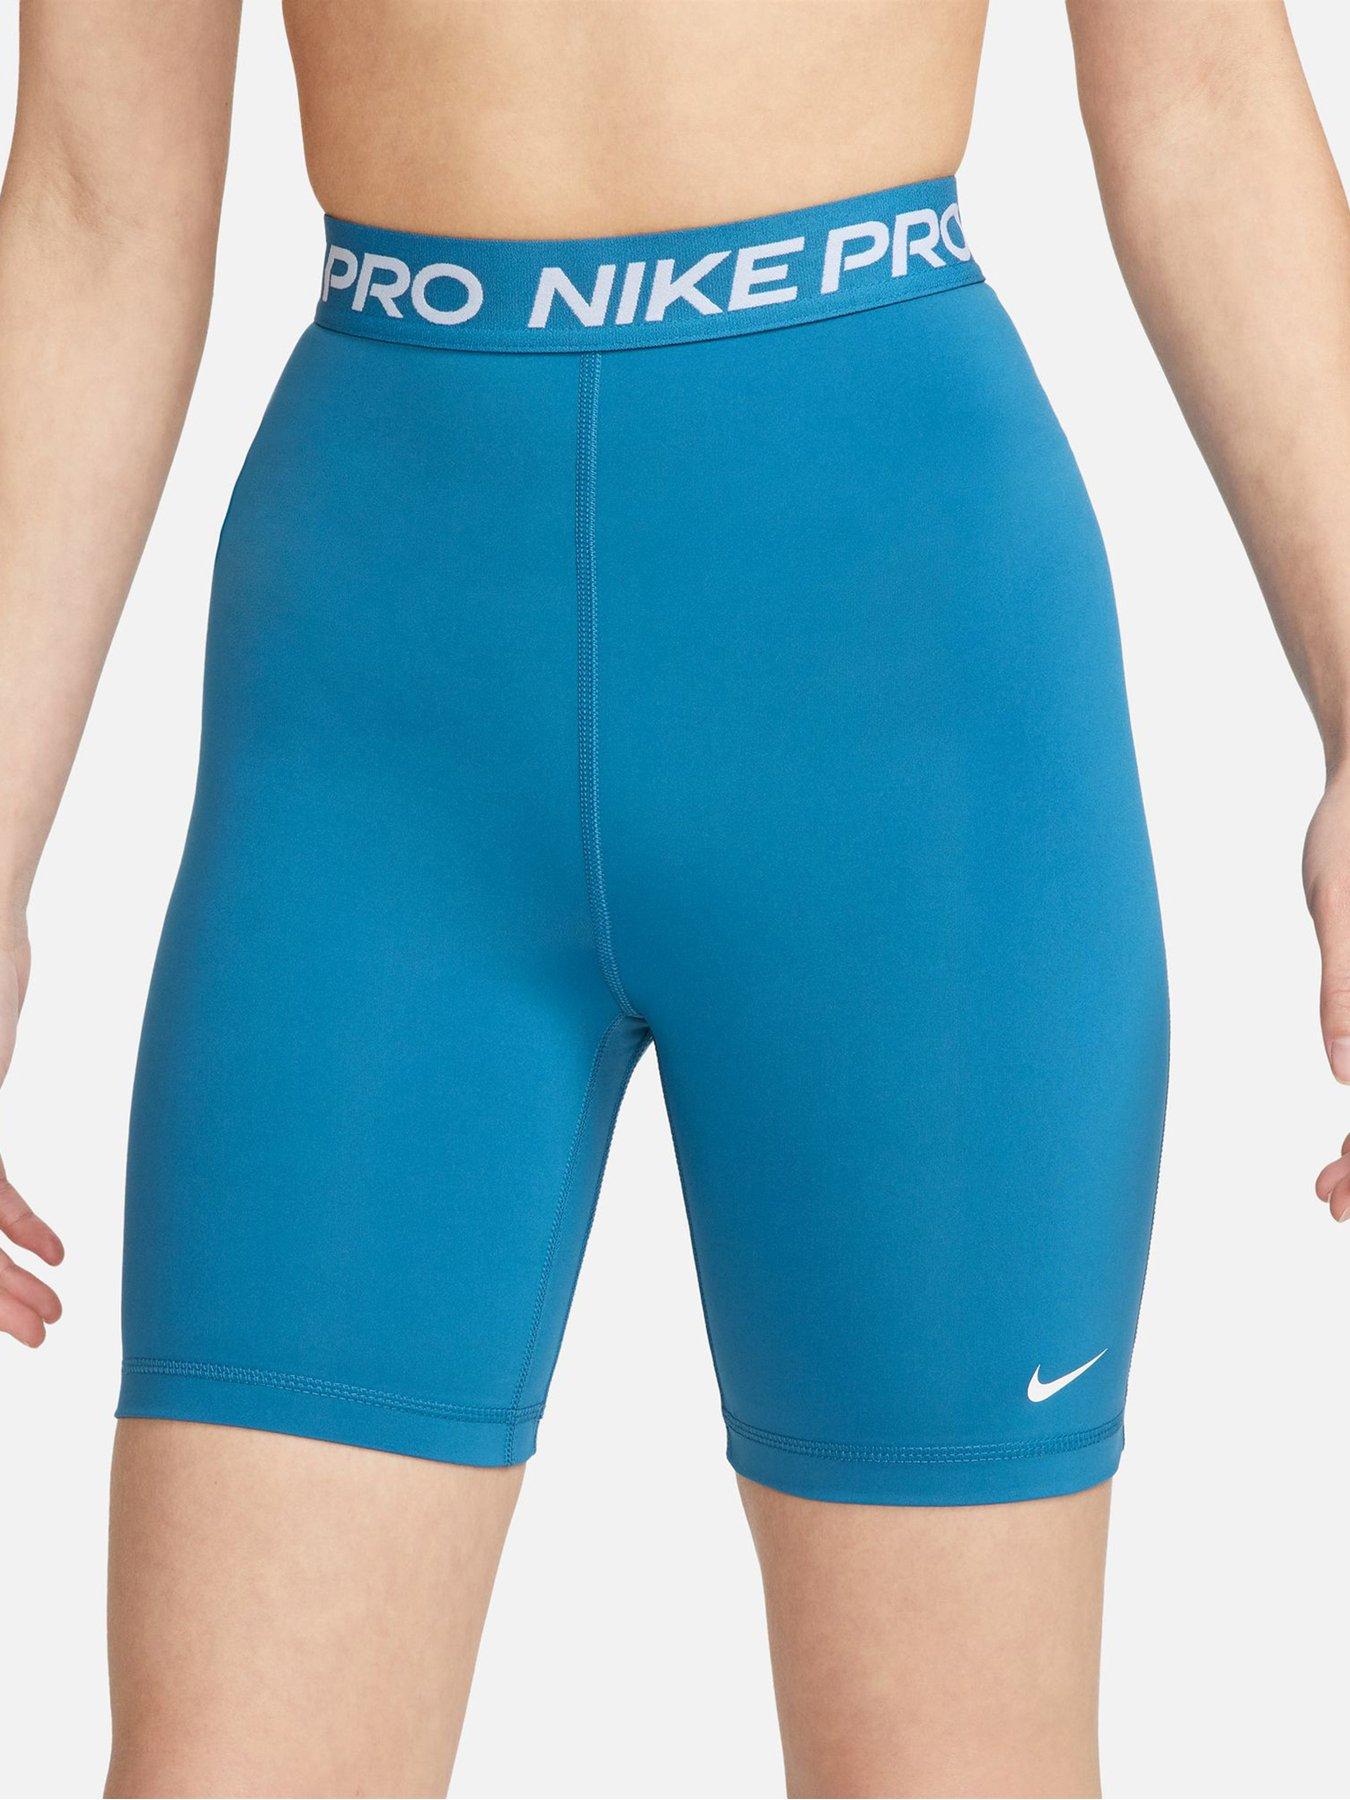 Nike Pro Shorts, Women's Nike Pro Shorts